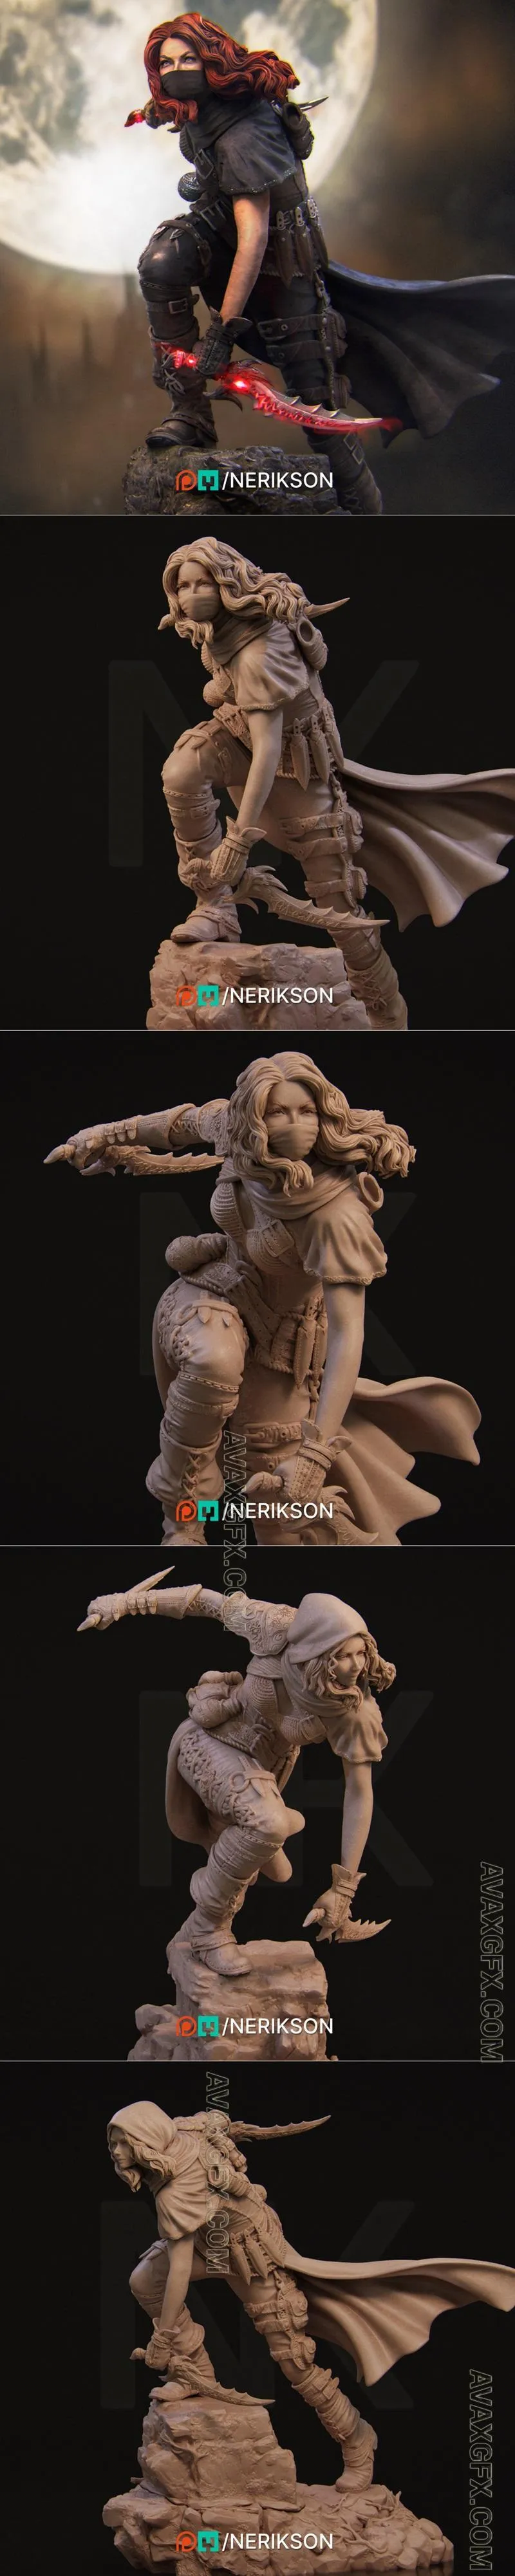 Nerikson - Enika The Assassin - STL 3D Model